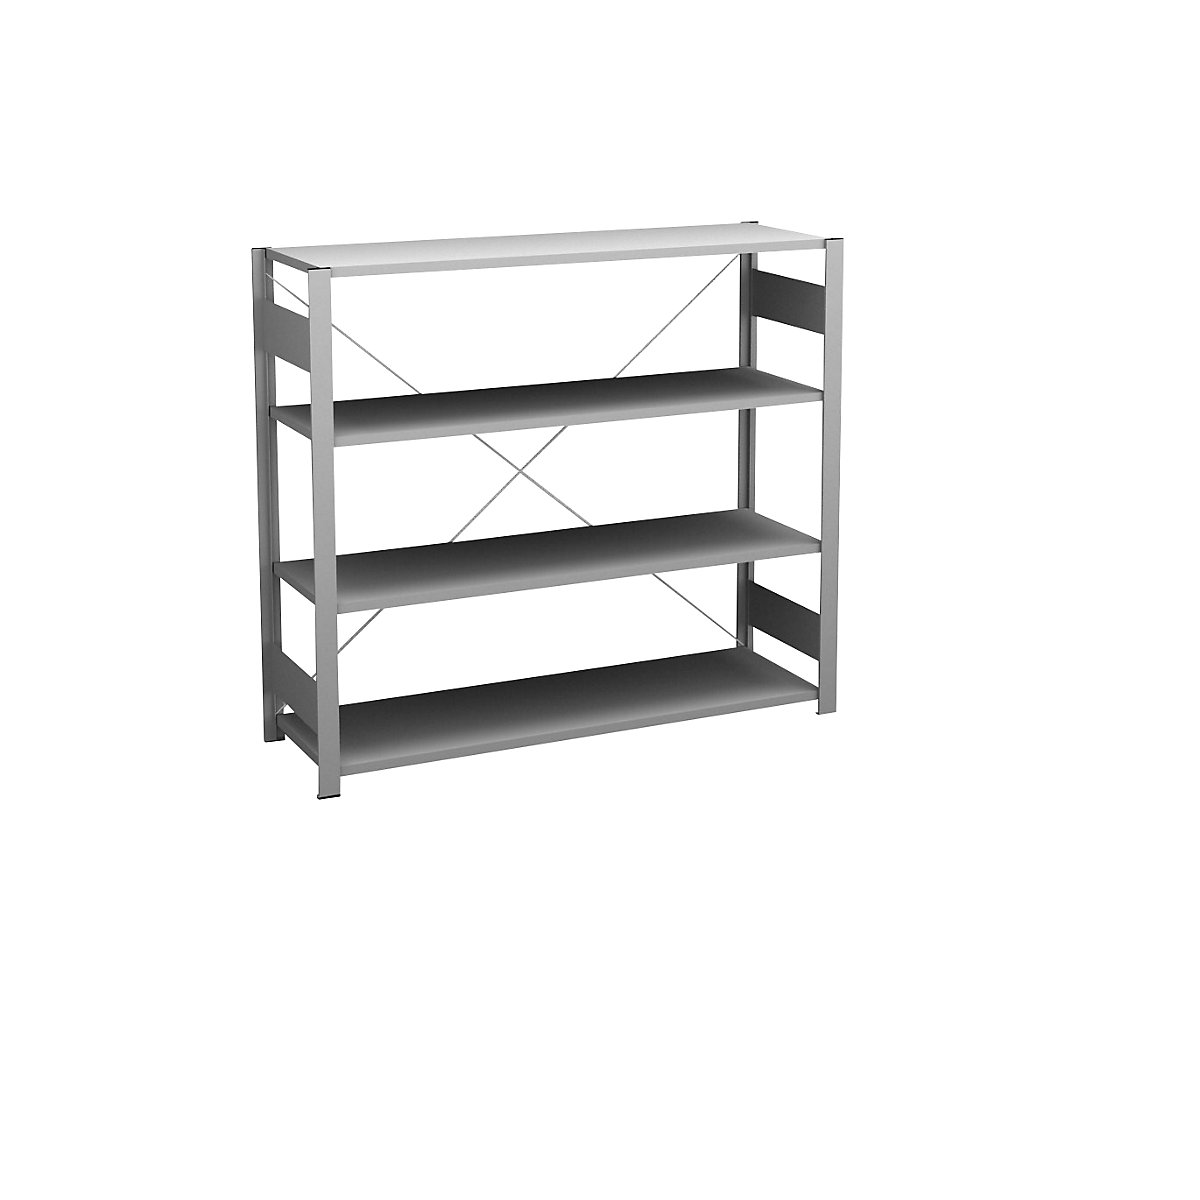 Zinc plated sideboard shelving unit – hofe, height 1200 mm, 4 shelves, standard shelf unit, shelf depth 400 mm, max. shelf load 180 kg-2